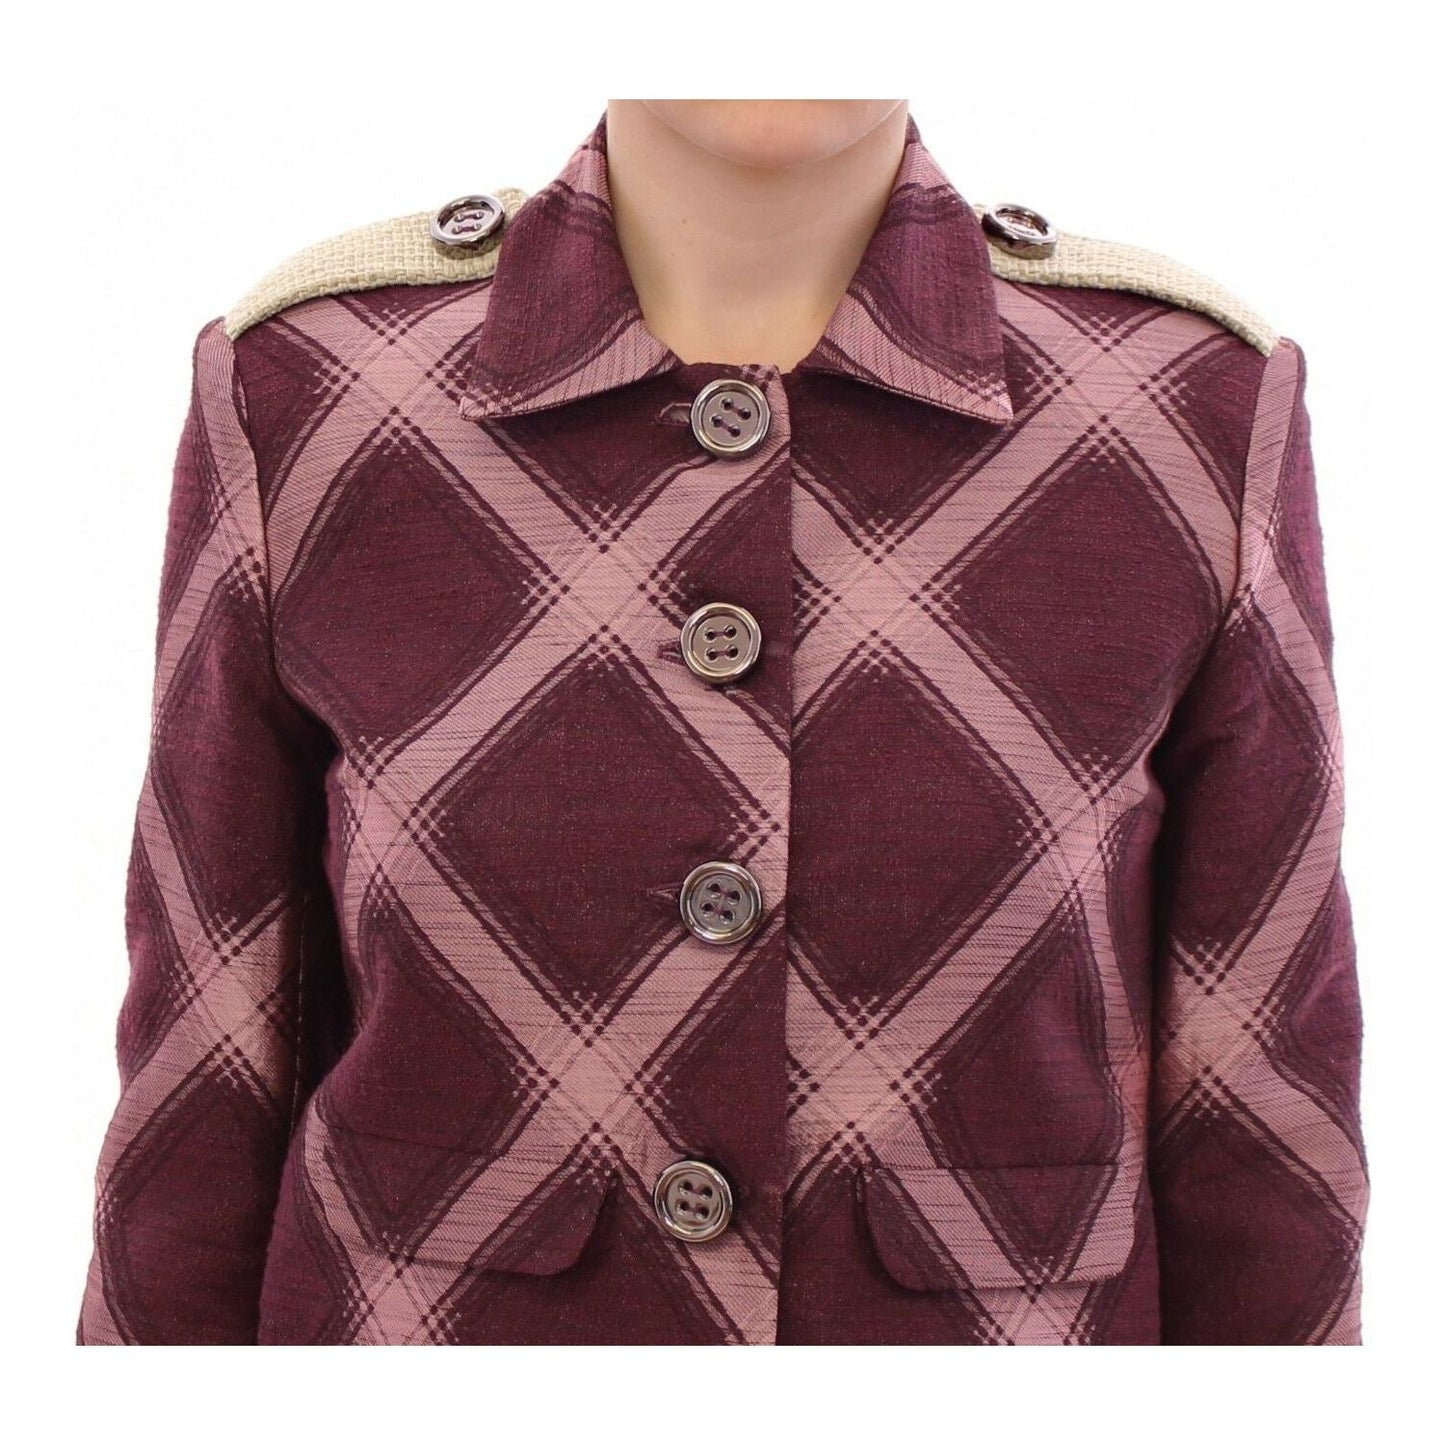 House of Holland Elegant Multicolor Check Print Jacket WOMAN COATS & JACKETS check-trench-coat-blazer-purple-jacket